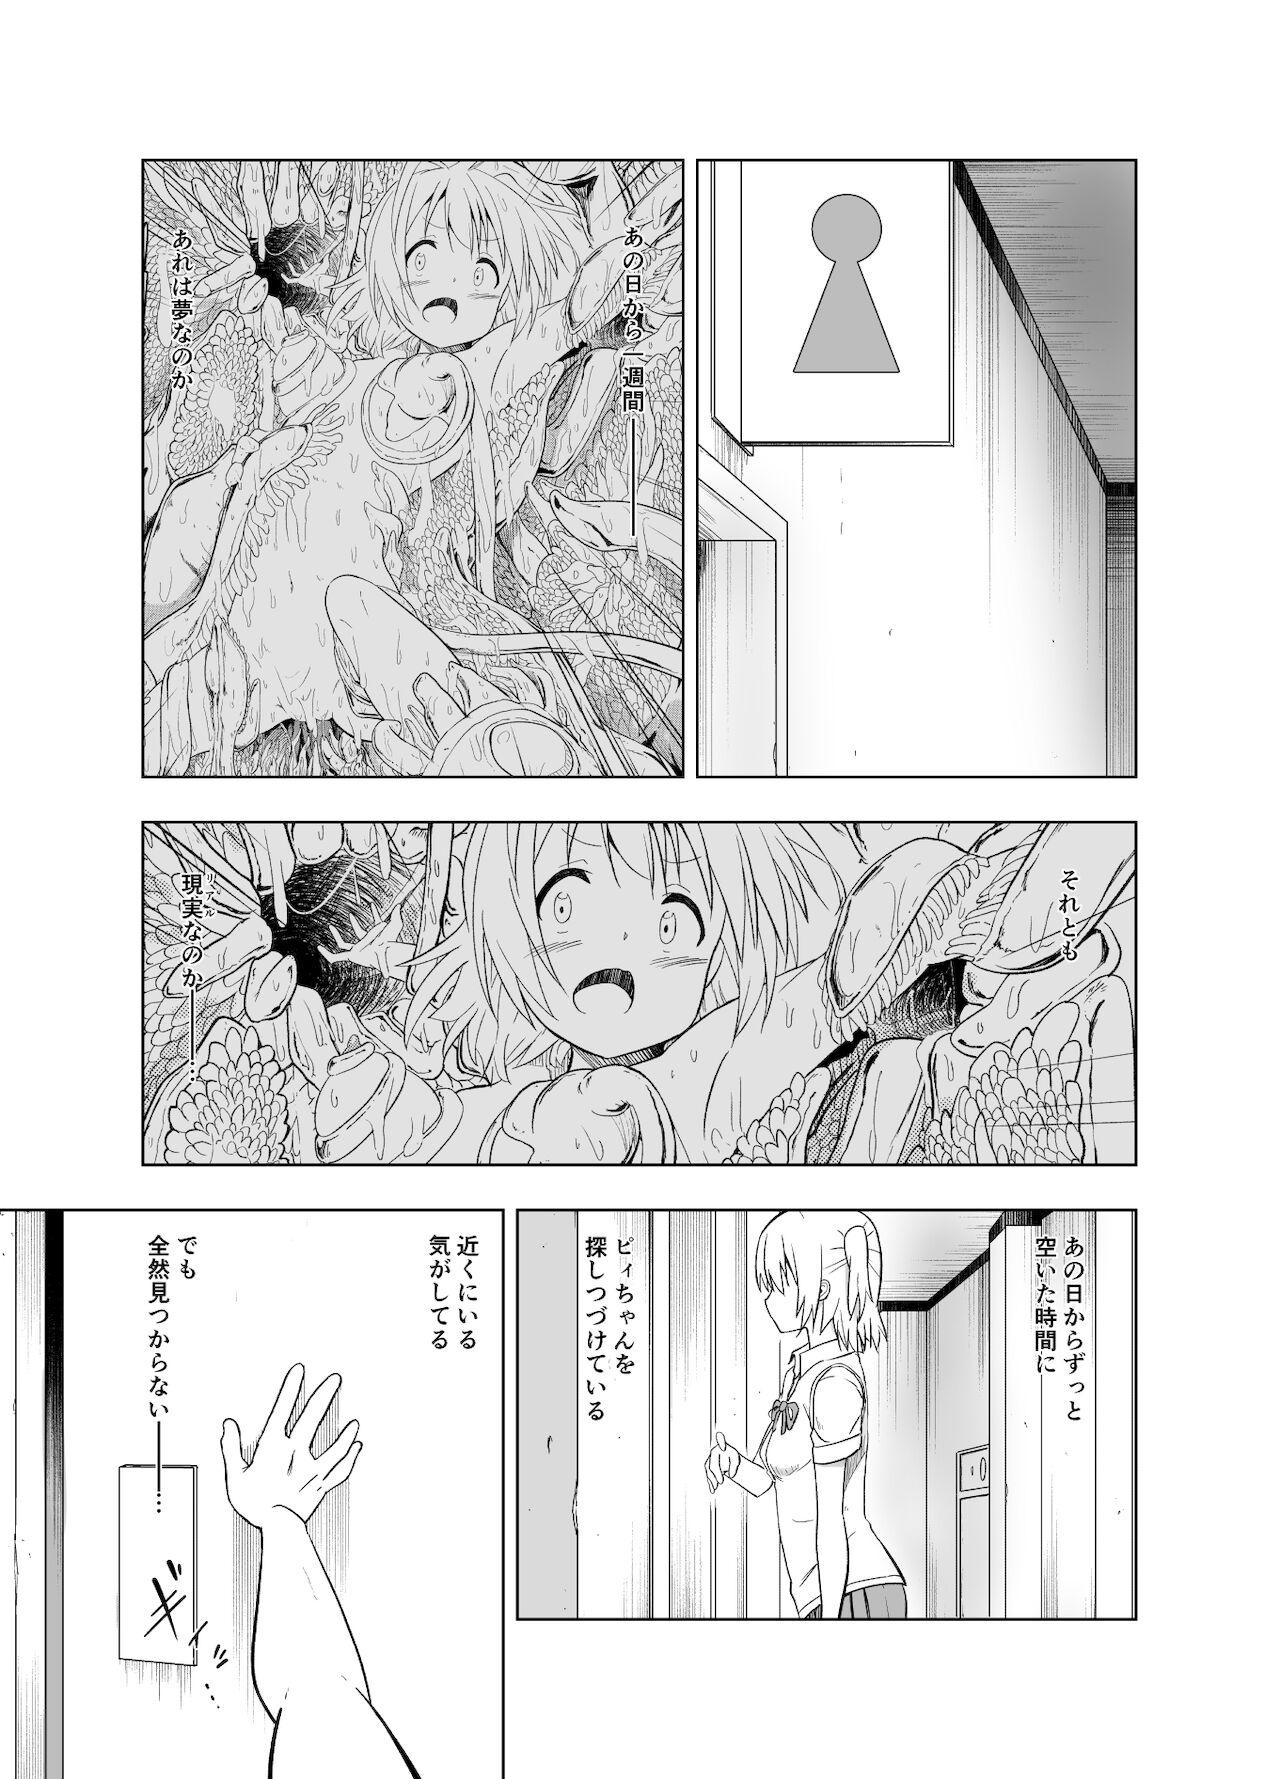 Analfuck みらいいろ〜チガウいろ〜 - Original Village - Page 3